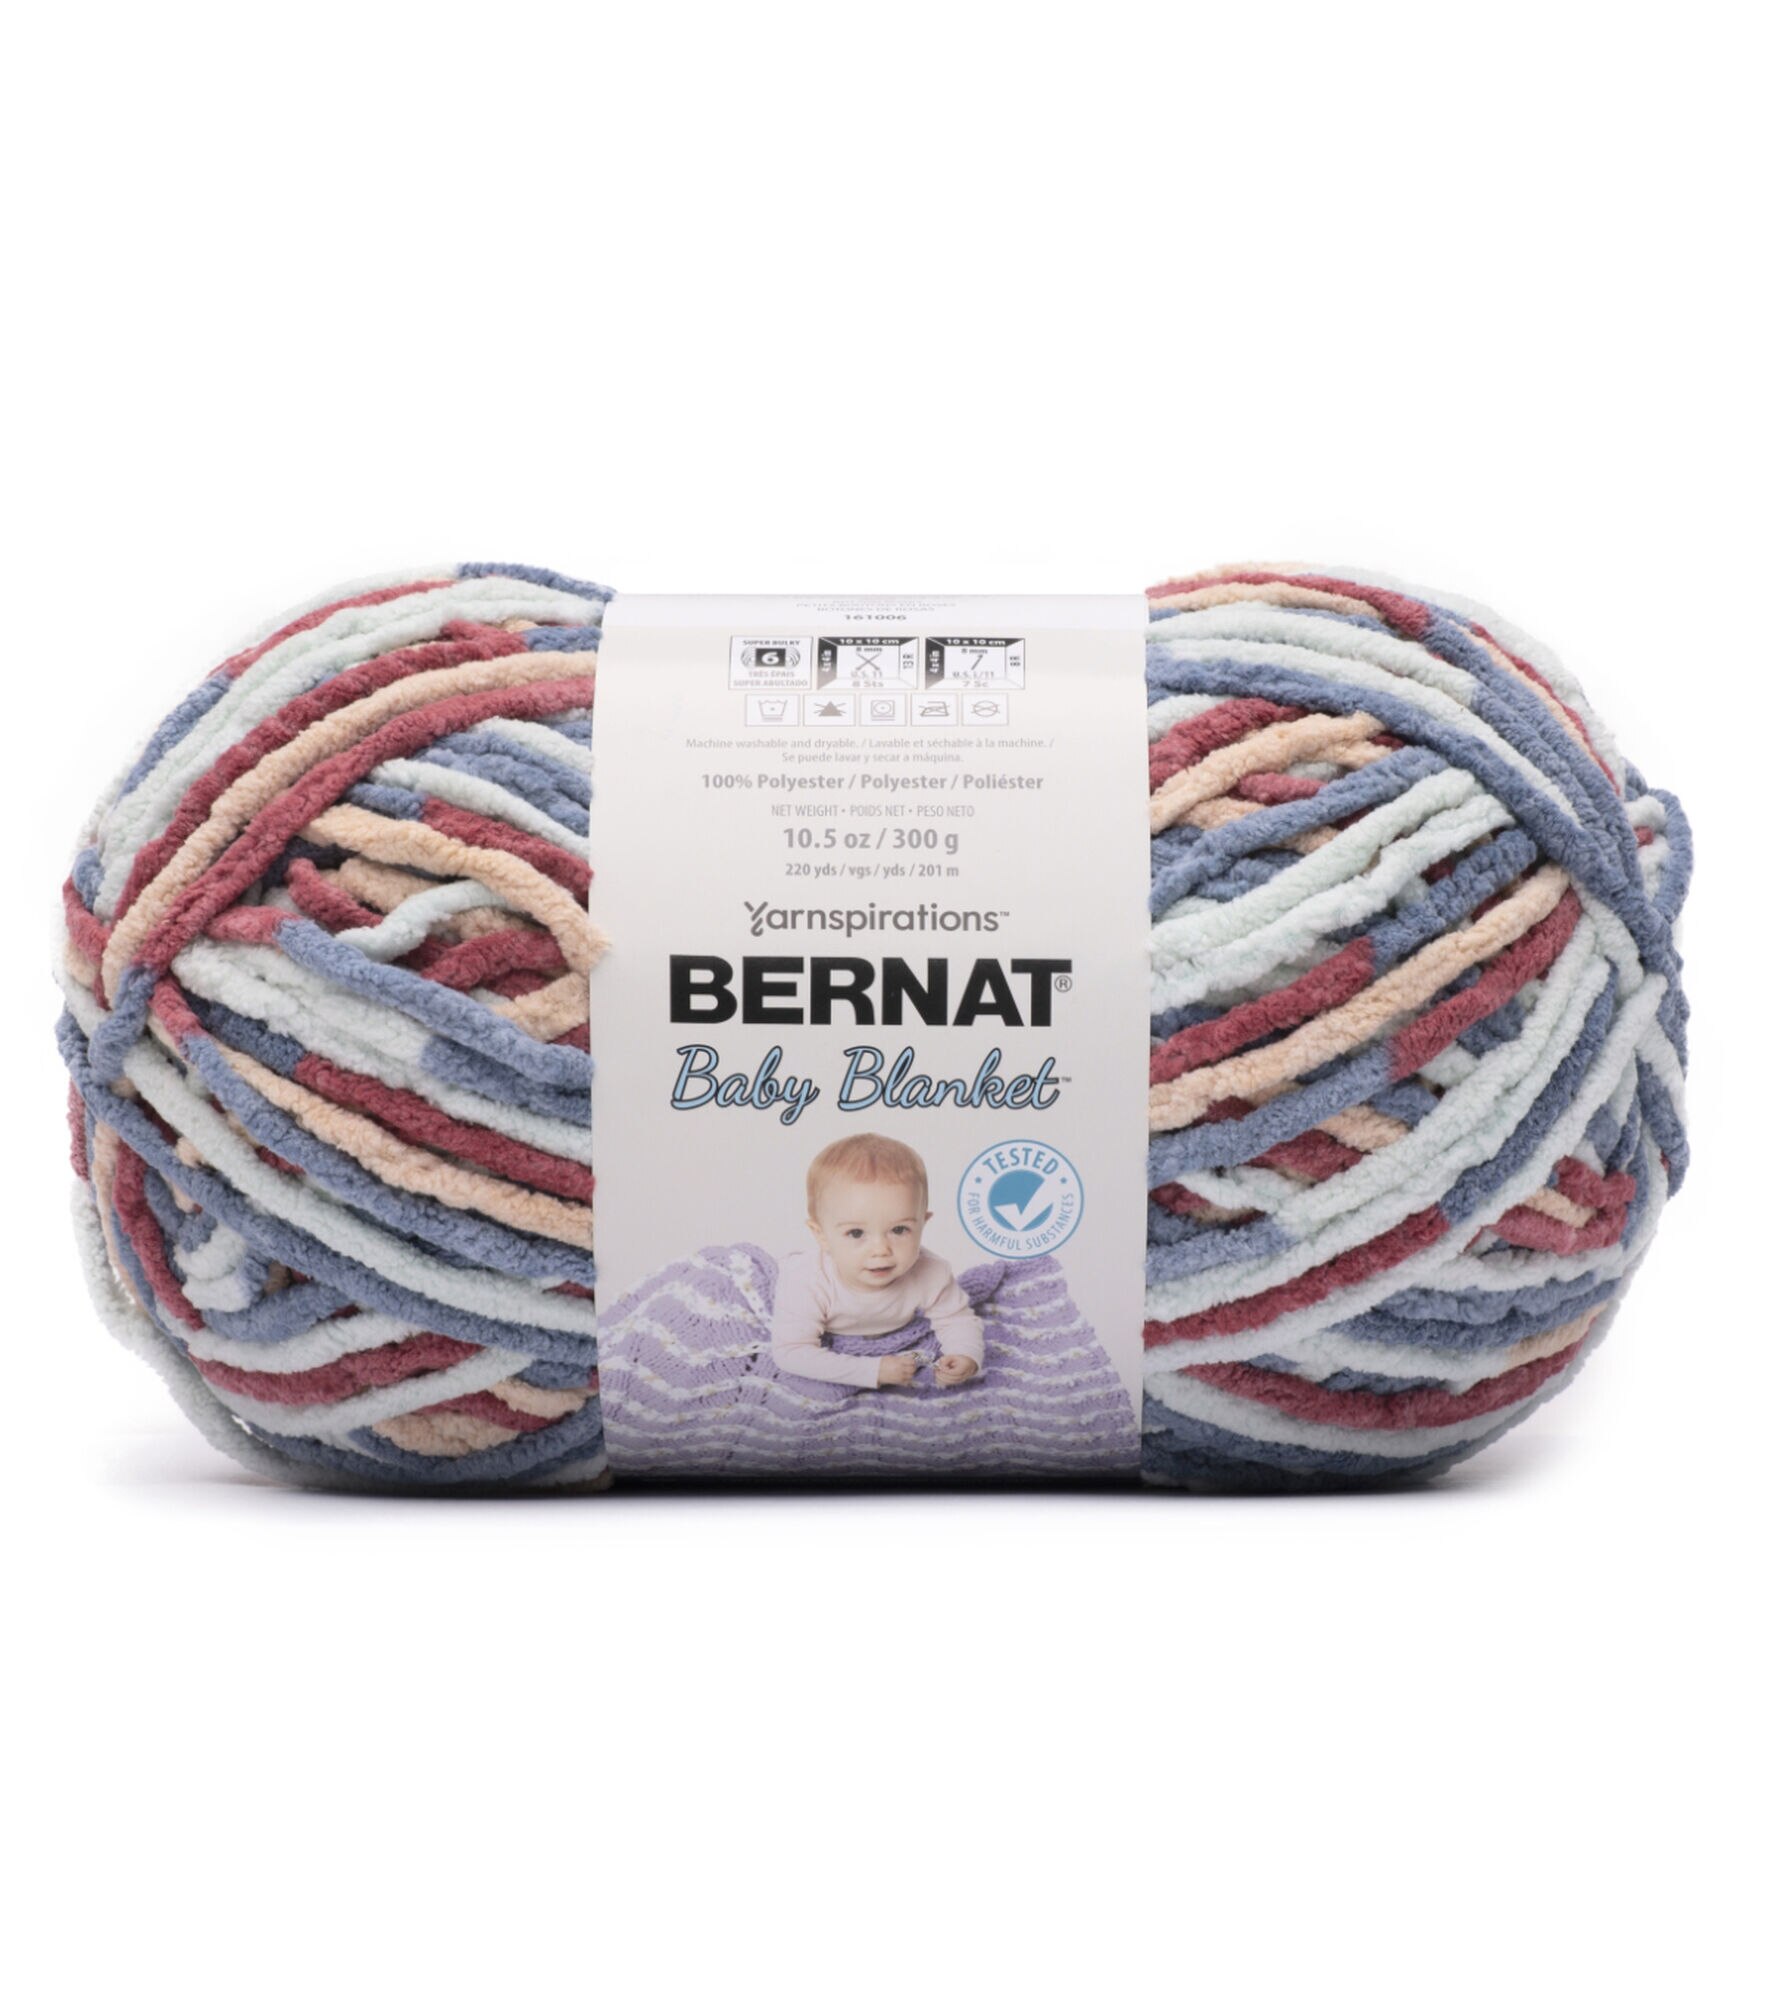 Bernat Blanket #6 Super Bulky Polyester Yarn, Gray Blue 10.5oz/300g, 220 Yards (4 Pack)